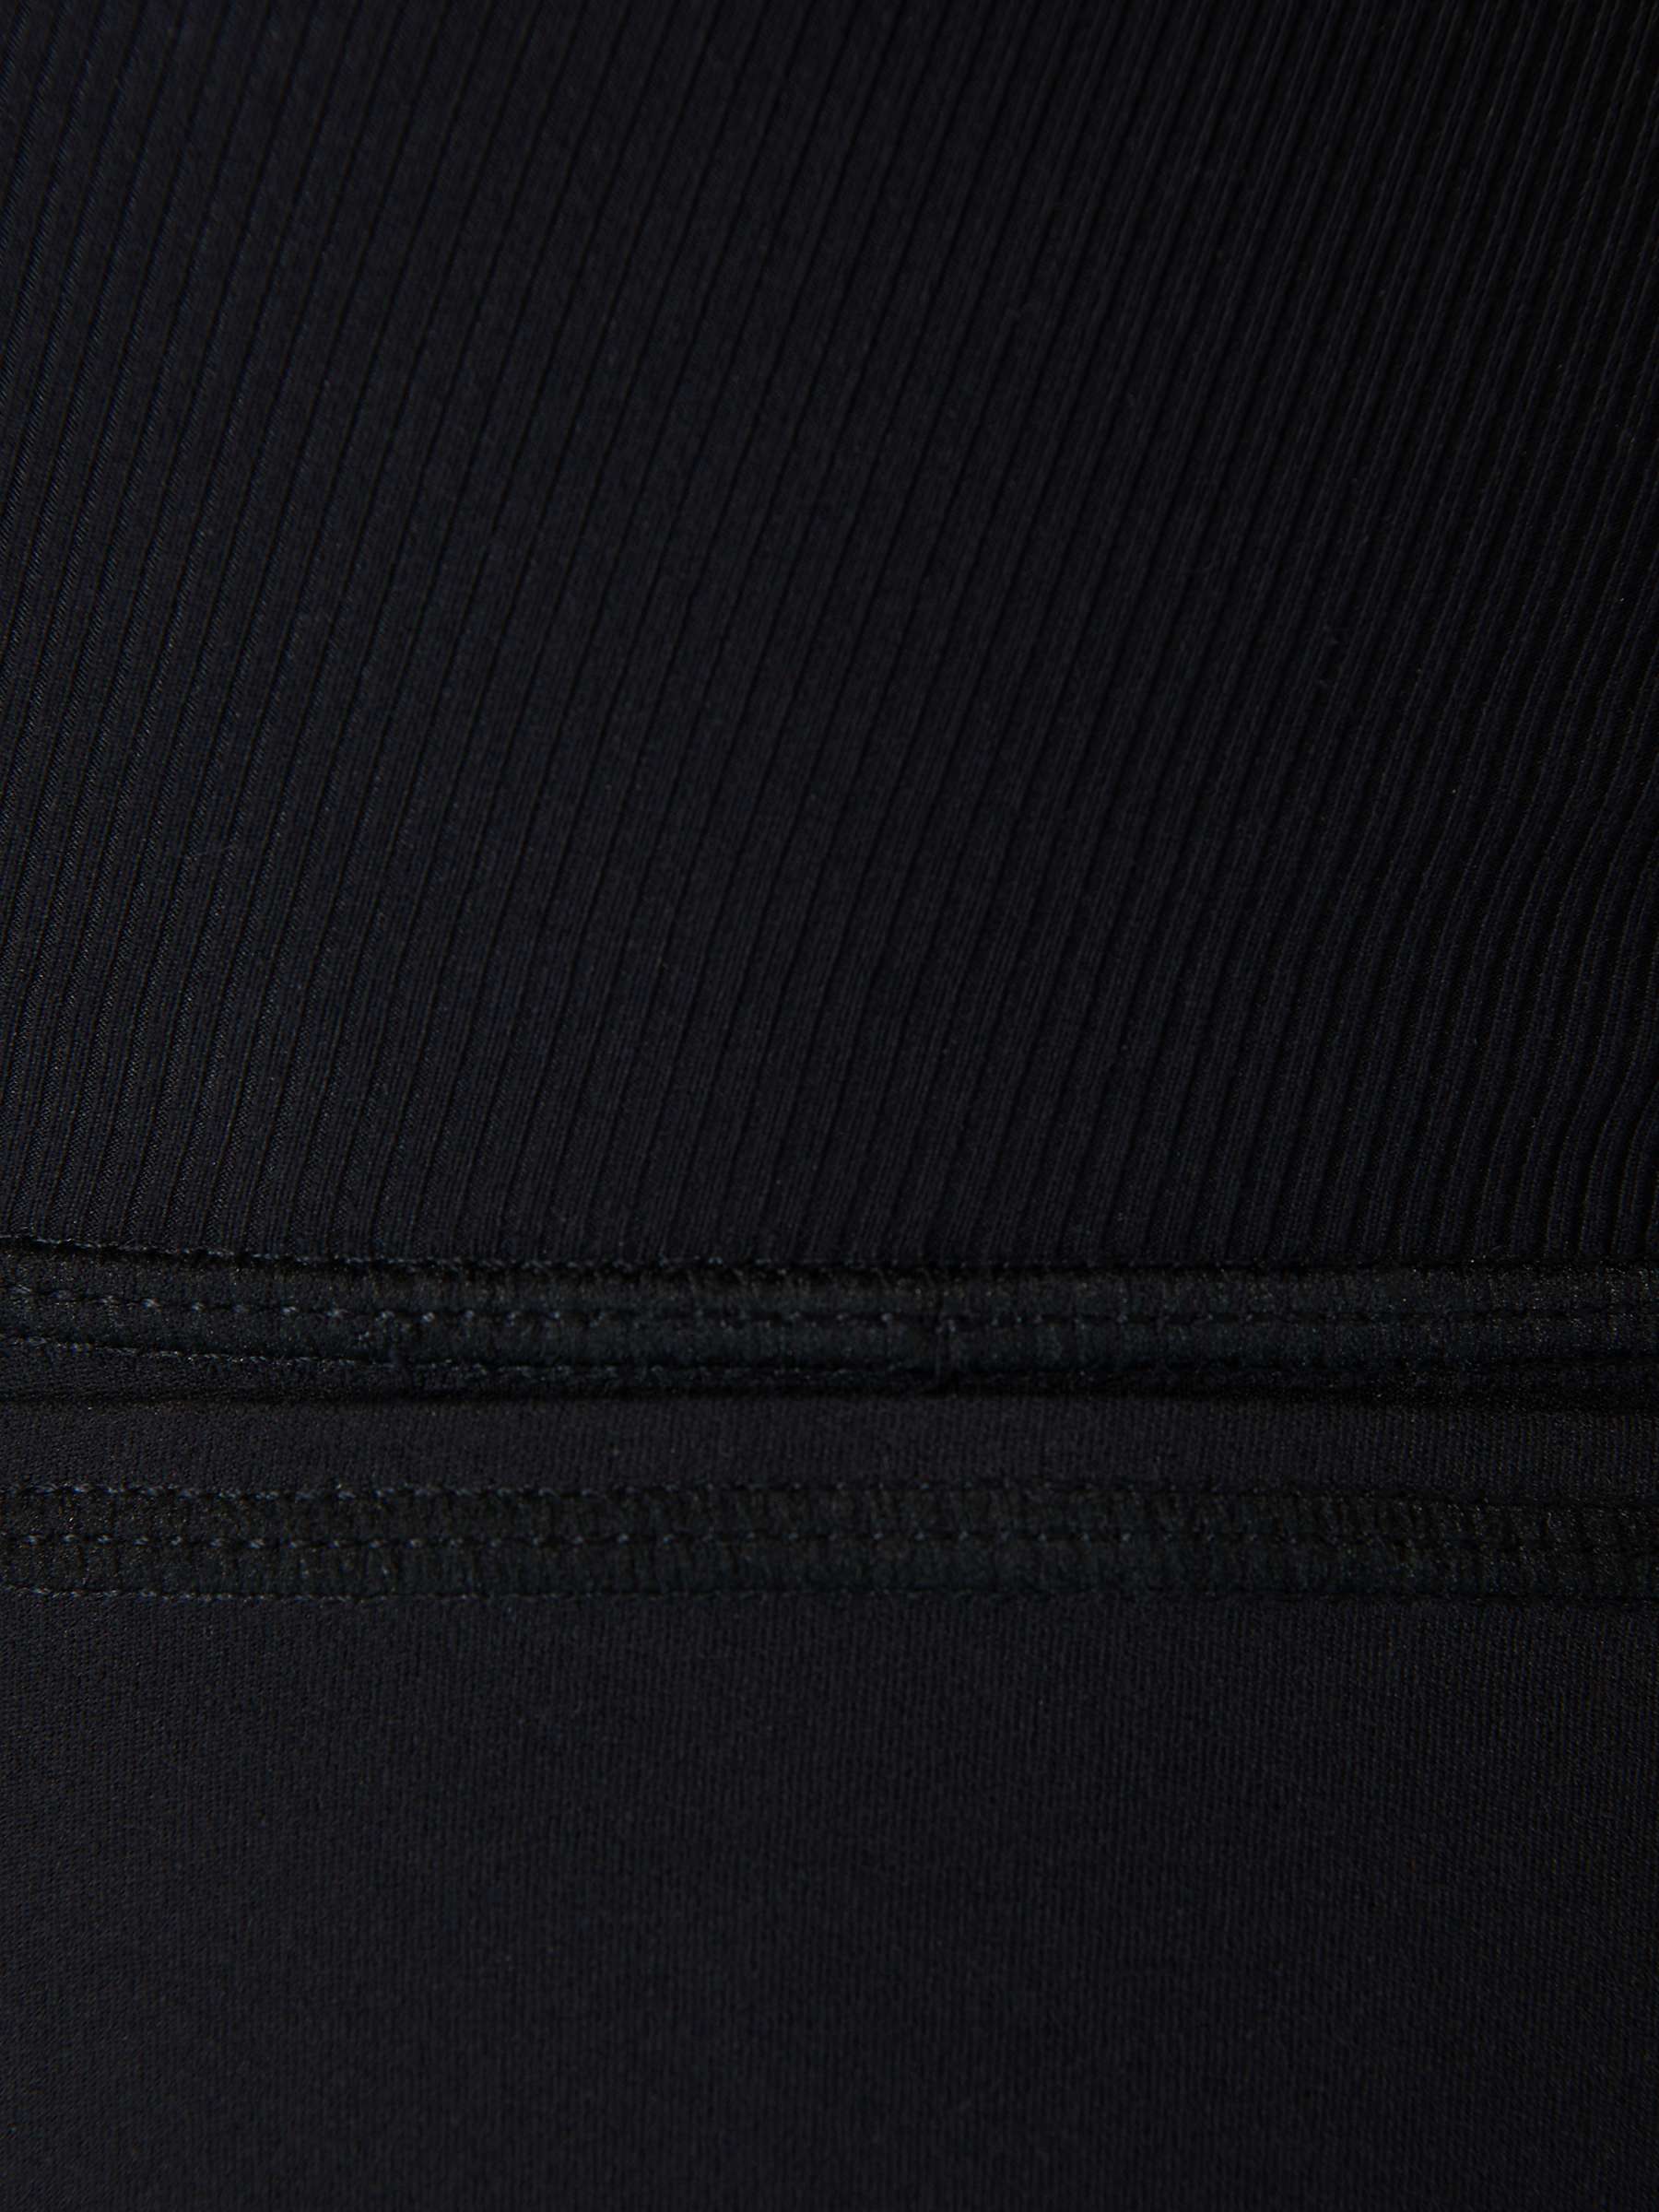 Buy Sweaty Betty Super Soft Ultra-Lite Wrap Yoga Shorts Online at johnlewis.com